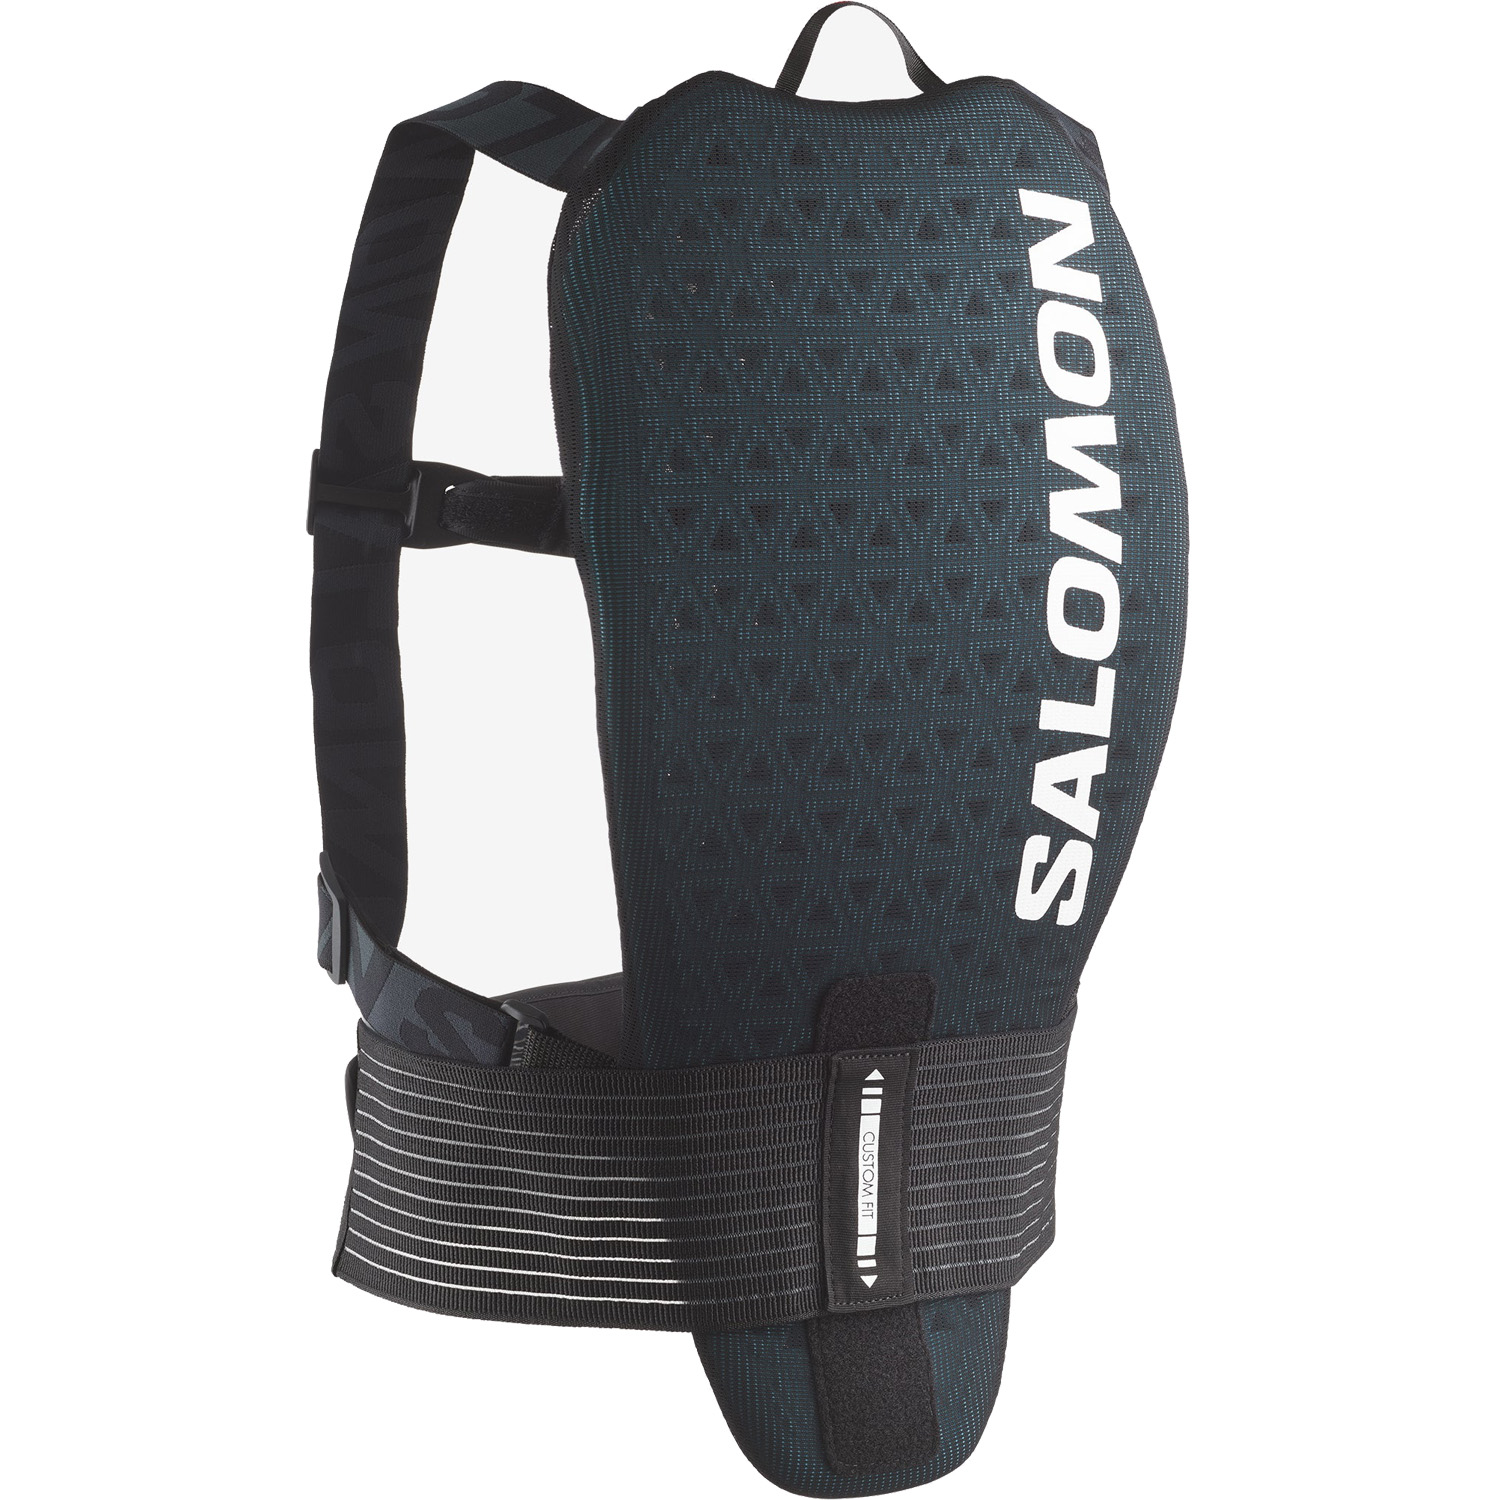 Protection Dorsale Salomon Flexcell Pour Ski / Snowboard